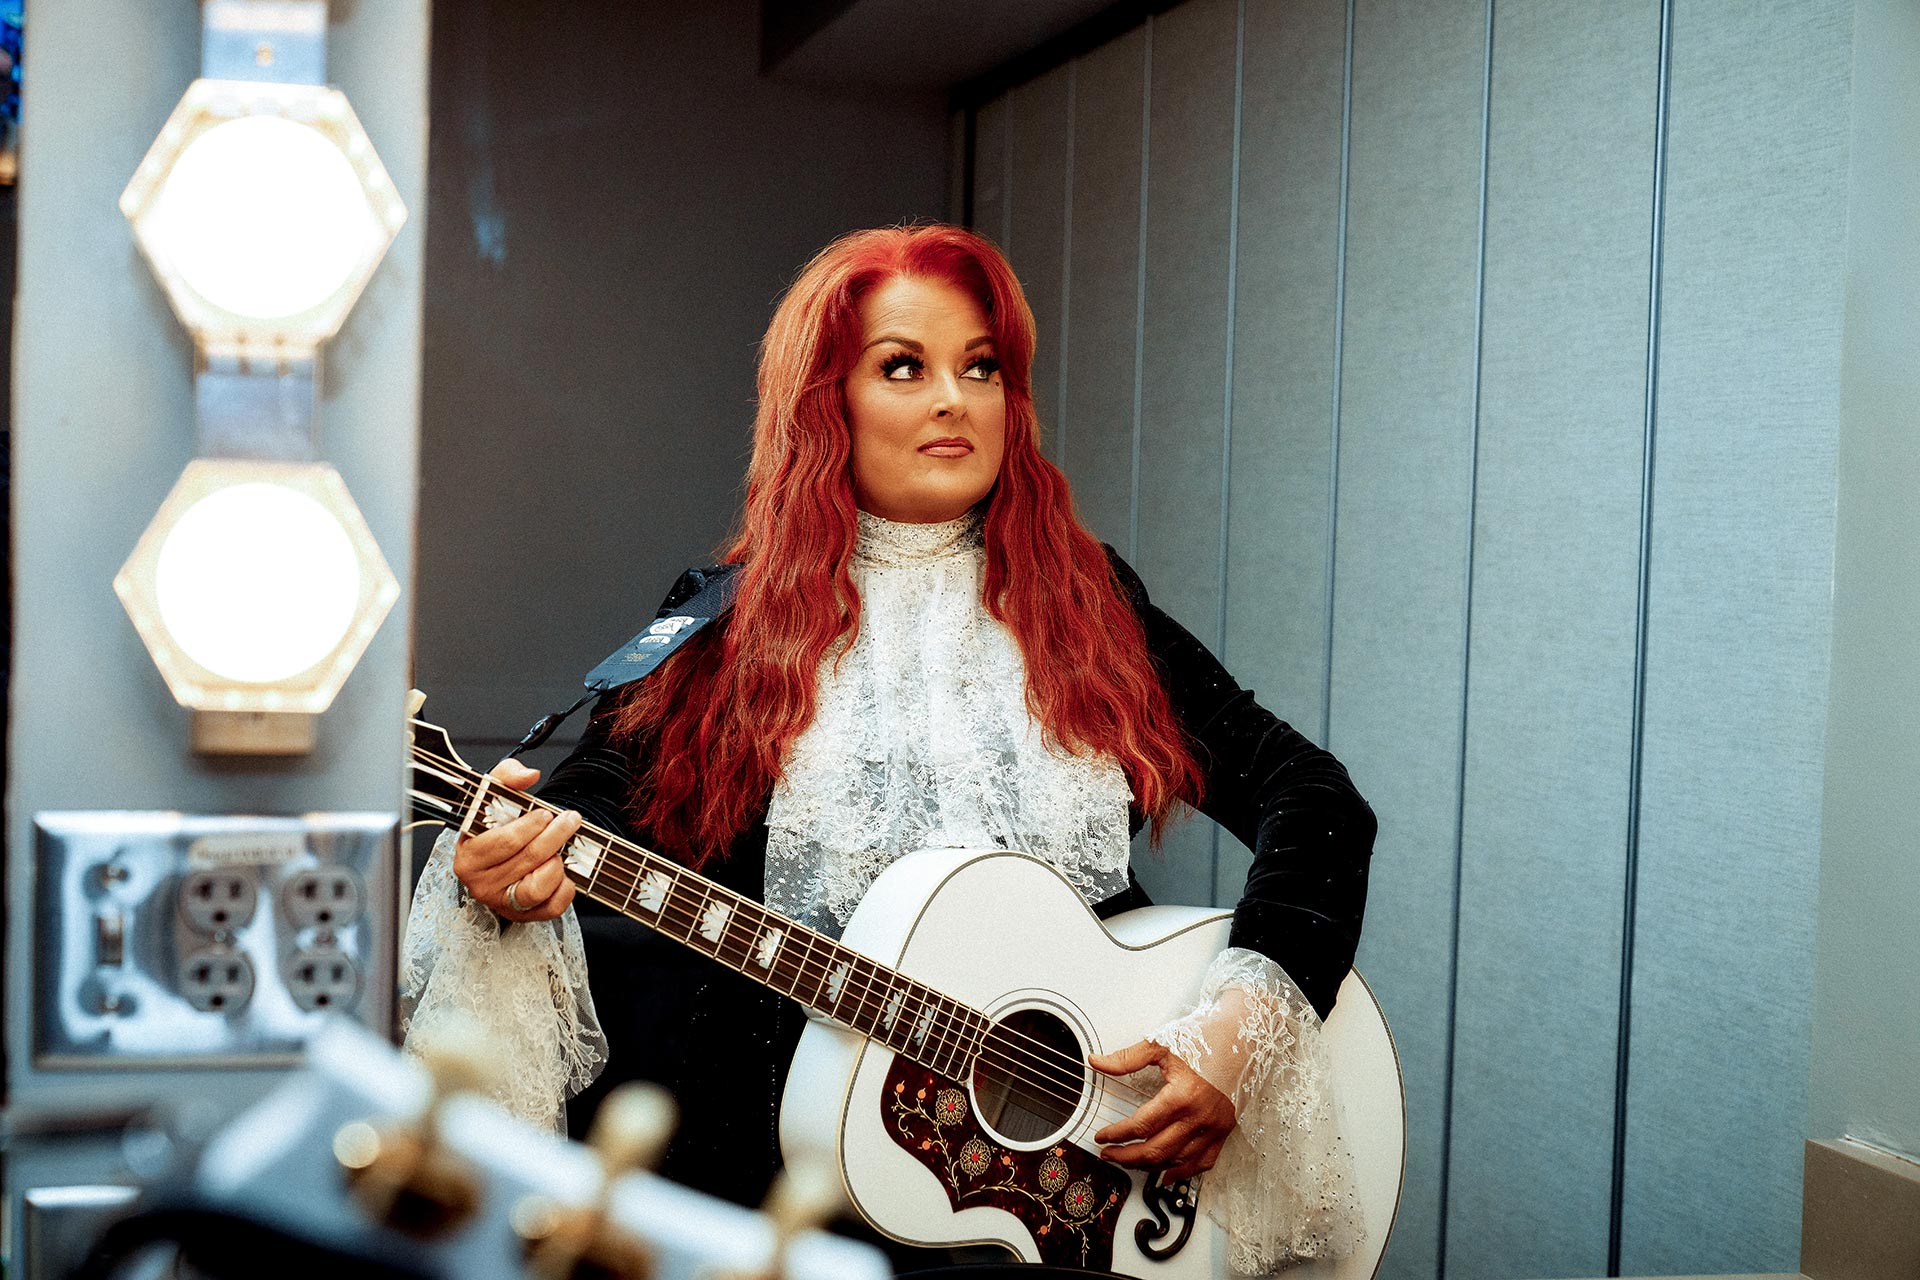 Wynonna backstage with guitar